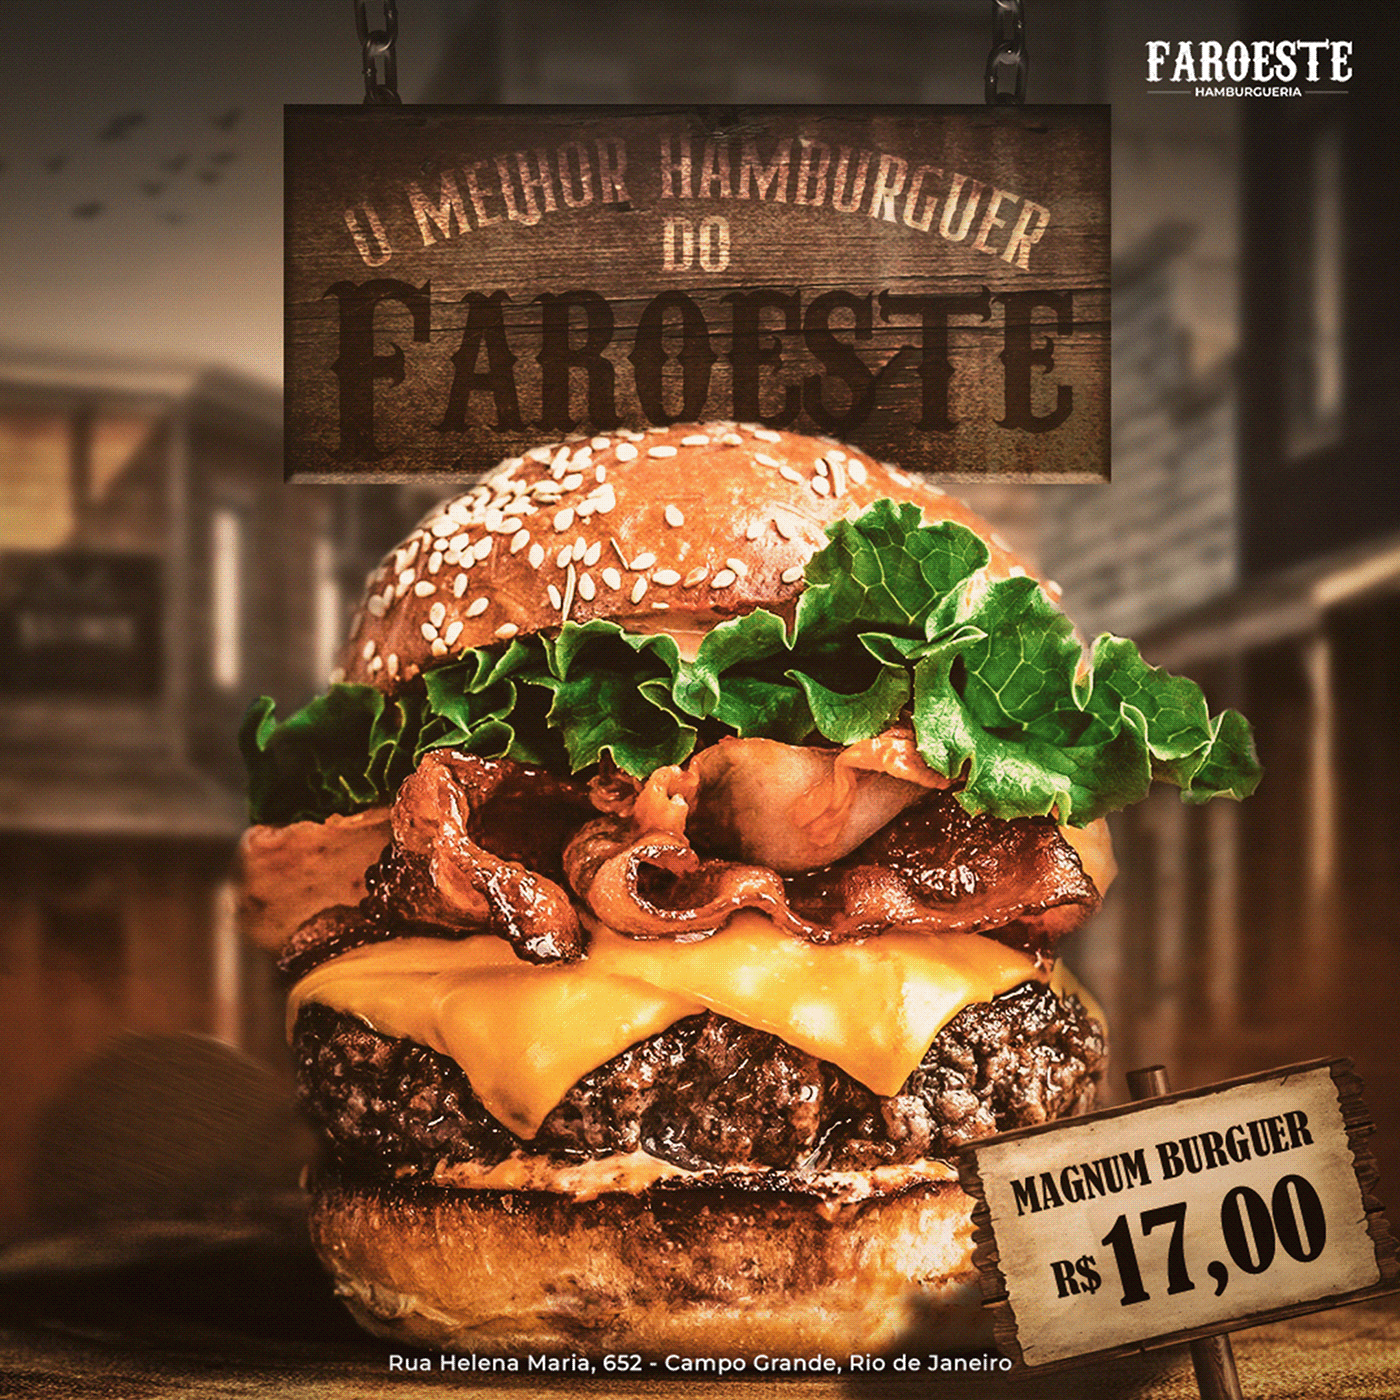 burger comida design instagram design social media faroeste farwest fastfood hamburguer hamburgueria